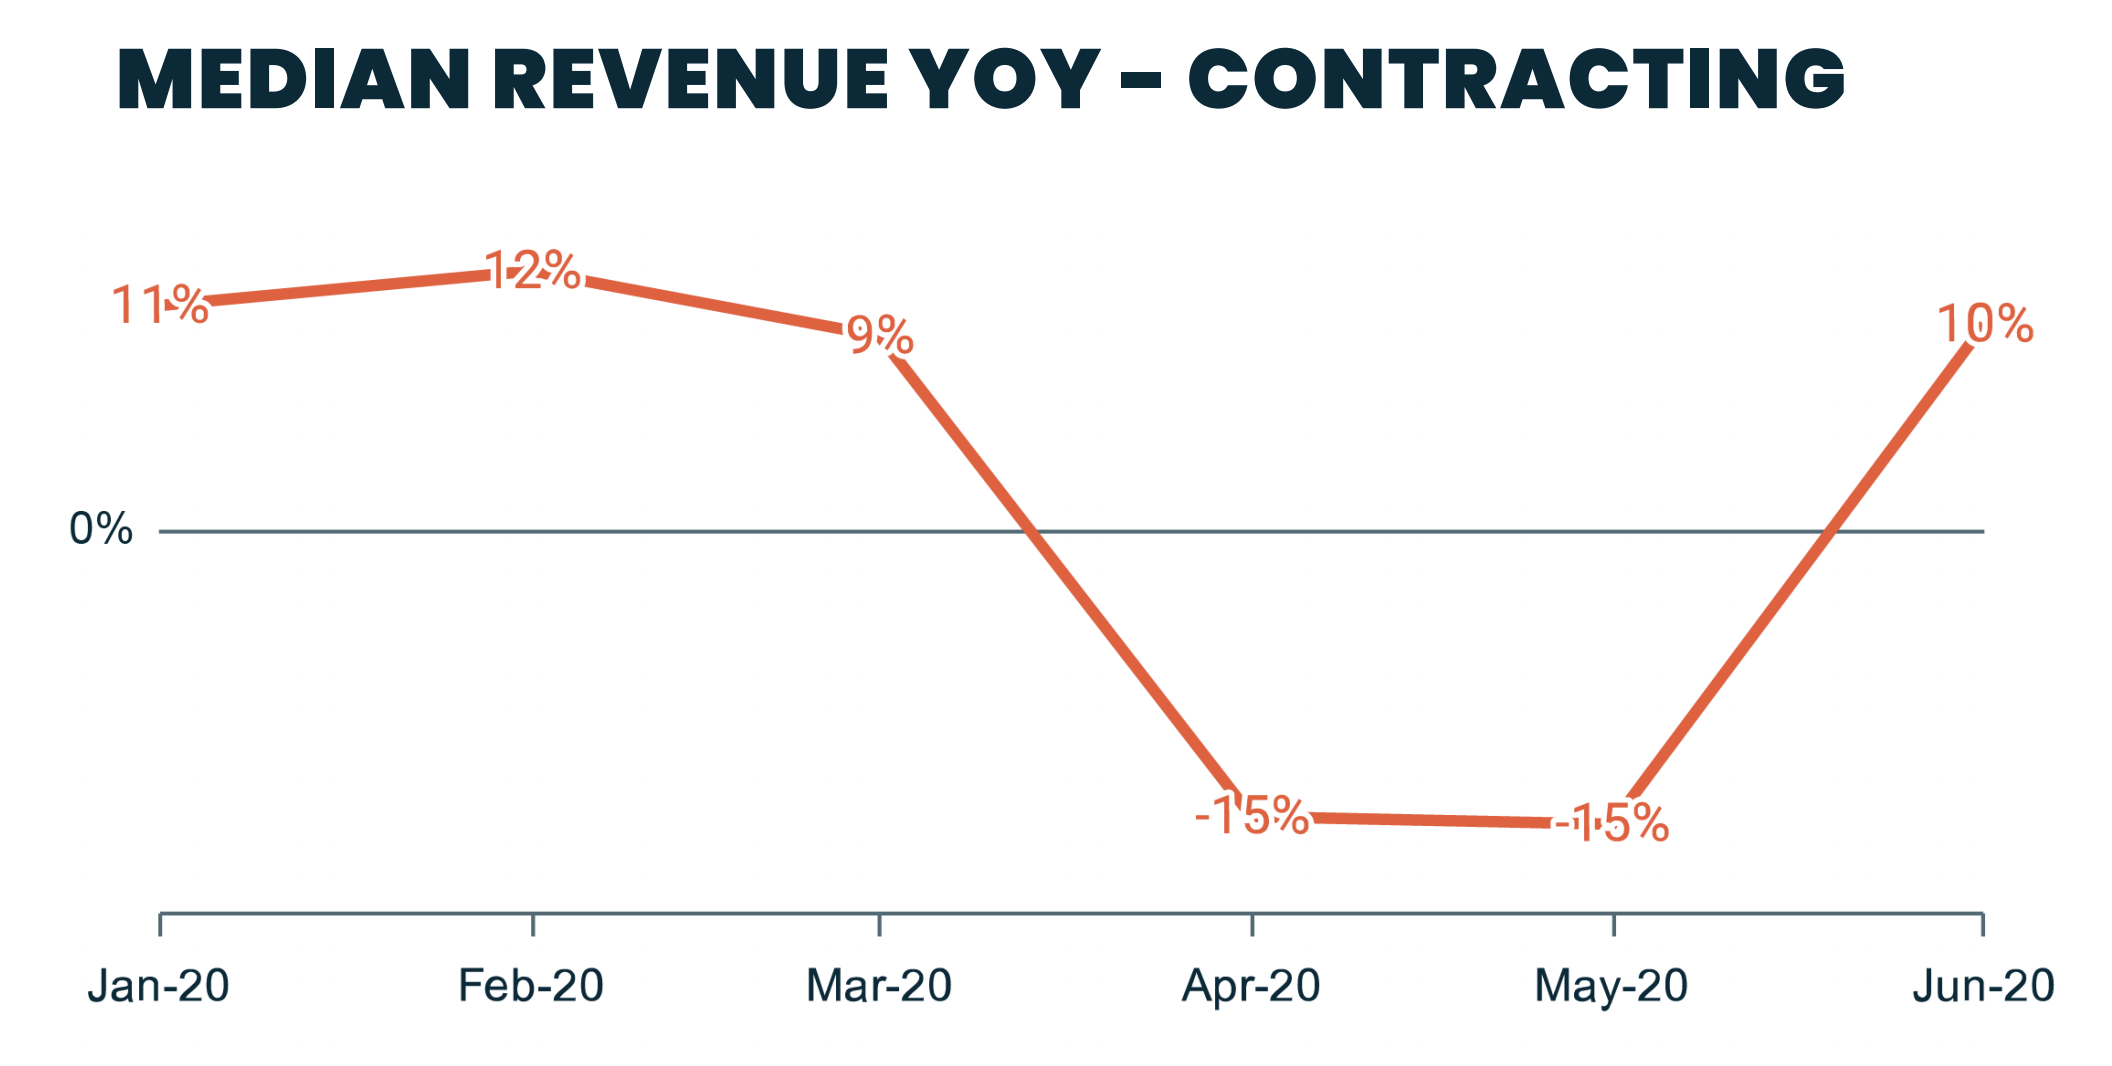 median revenue for home improvement contractors during covid-19